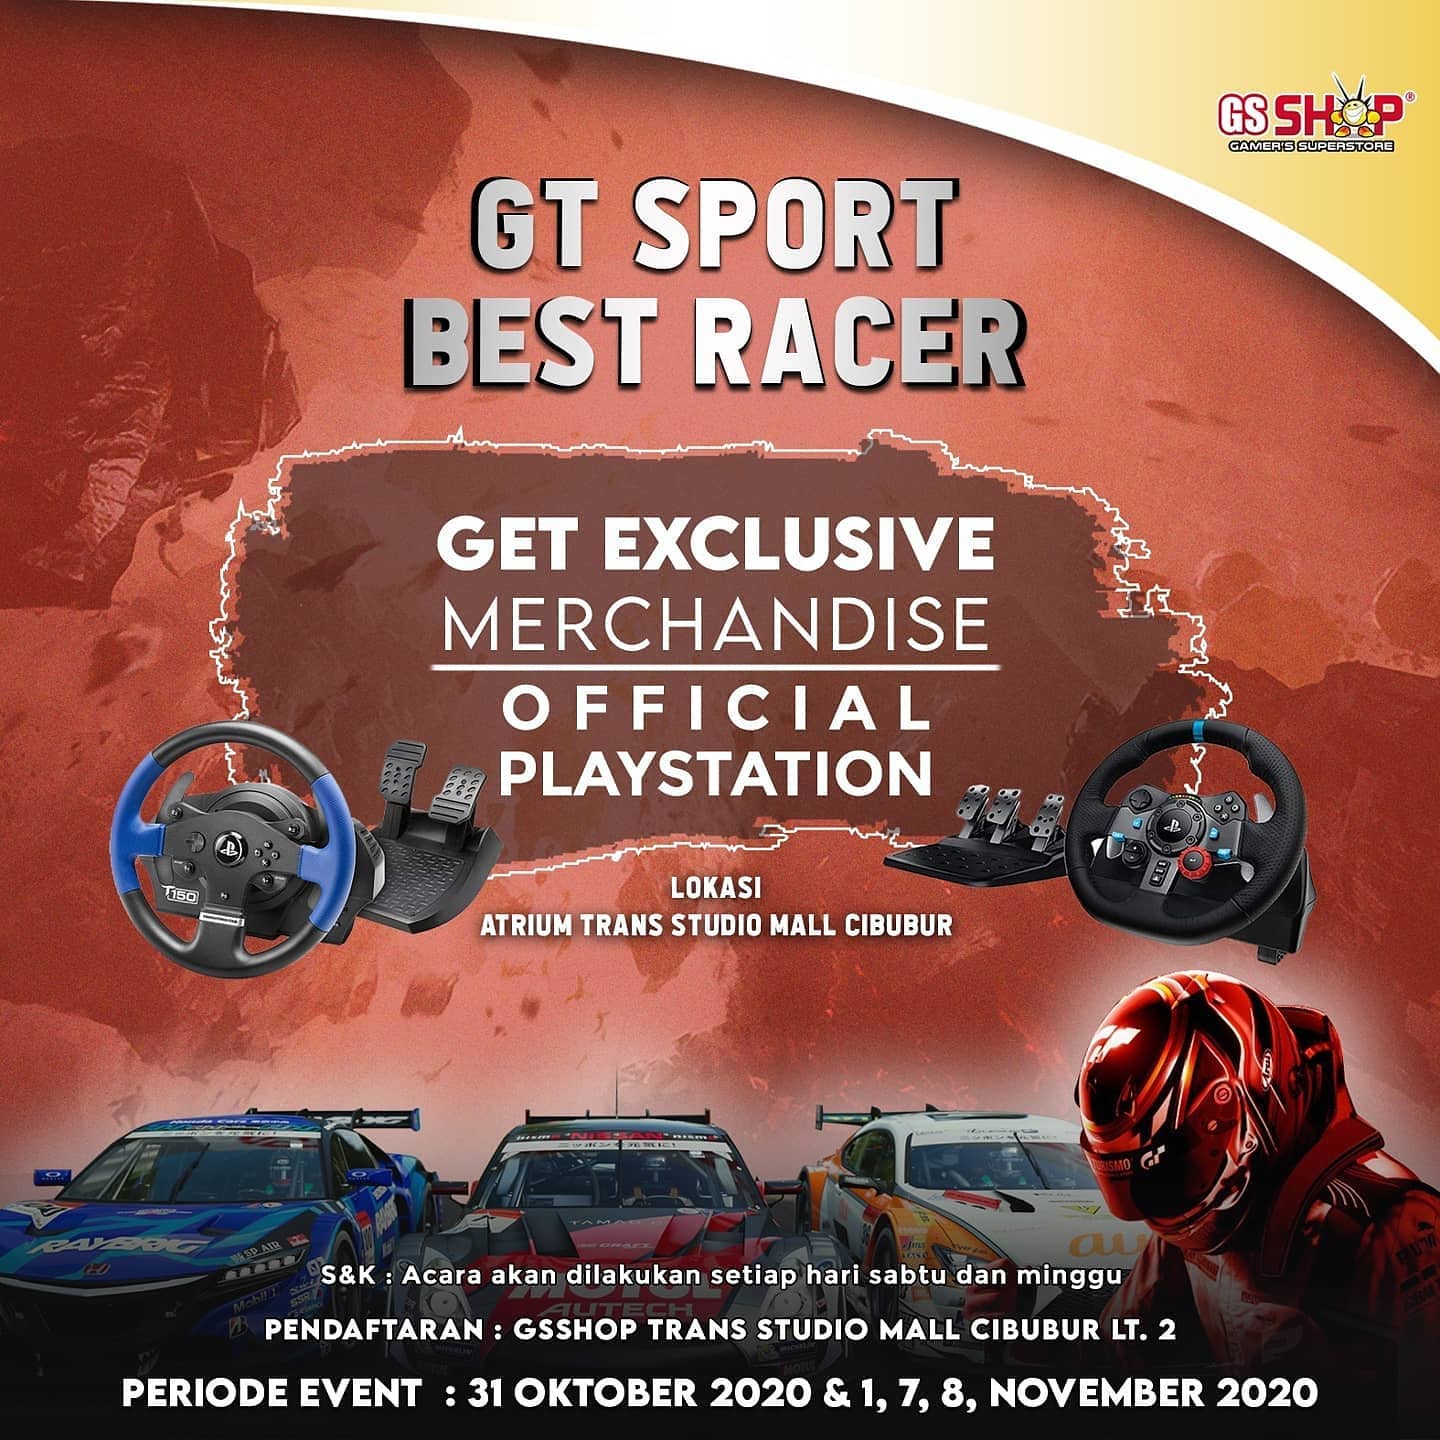 GT Sport Best Racer